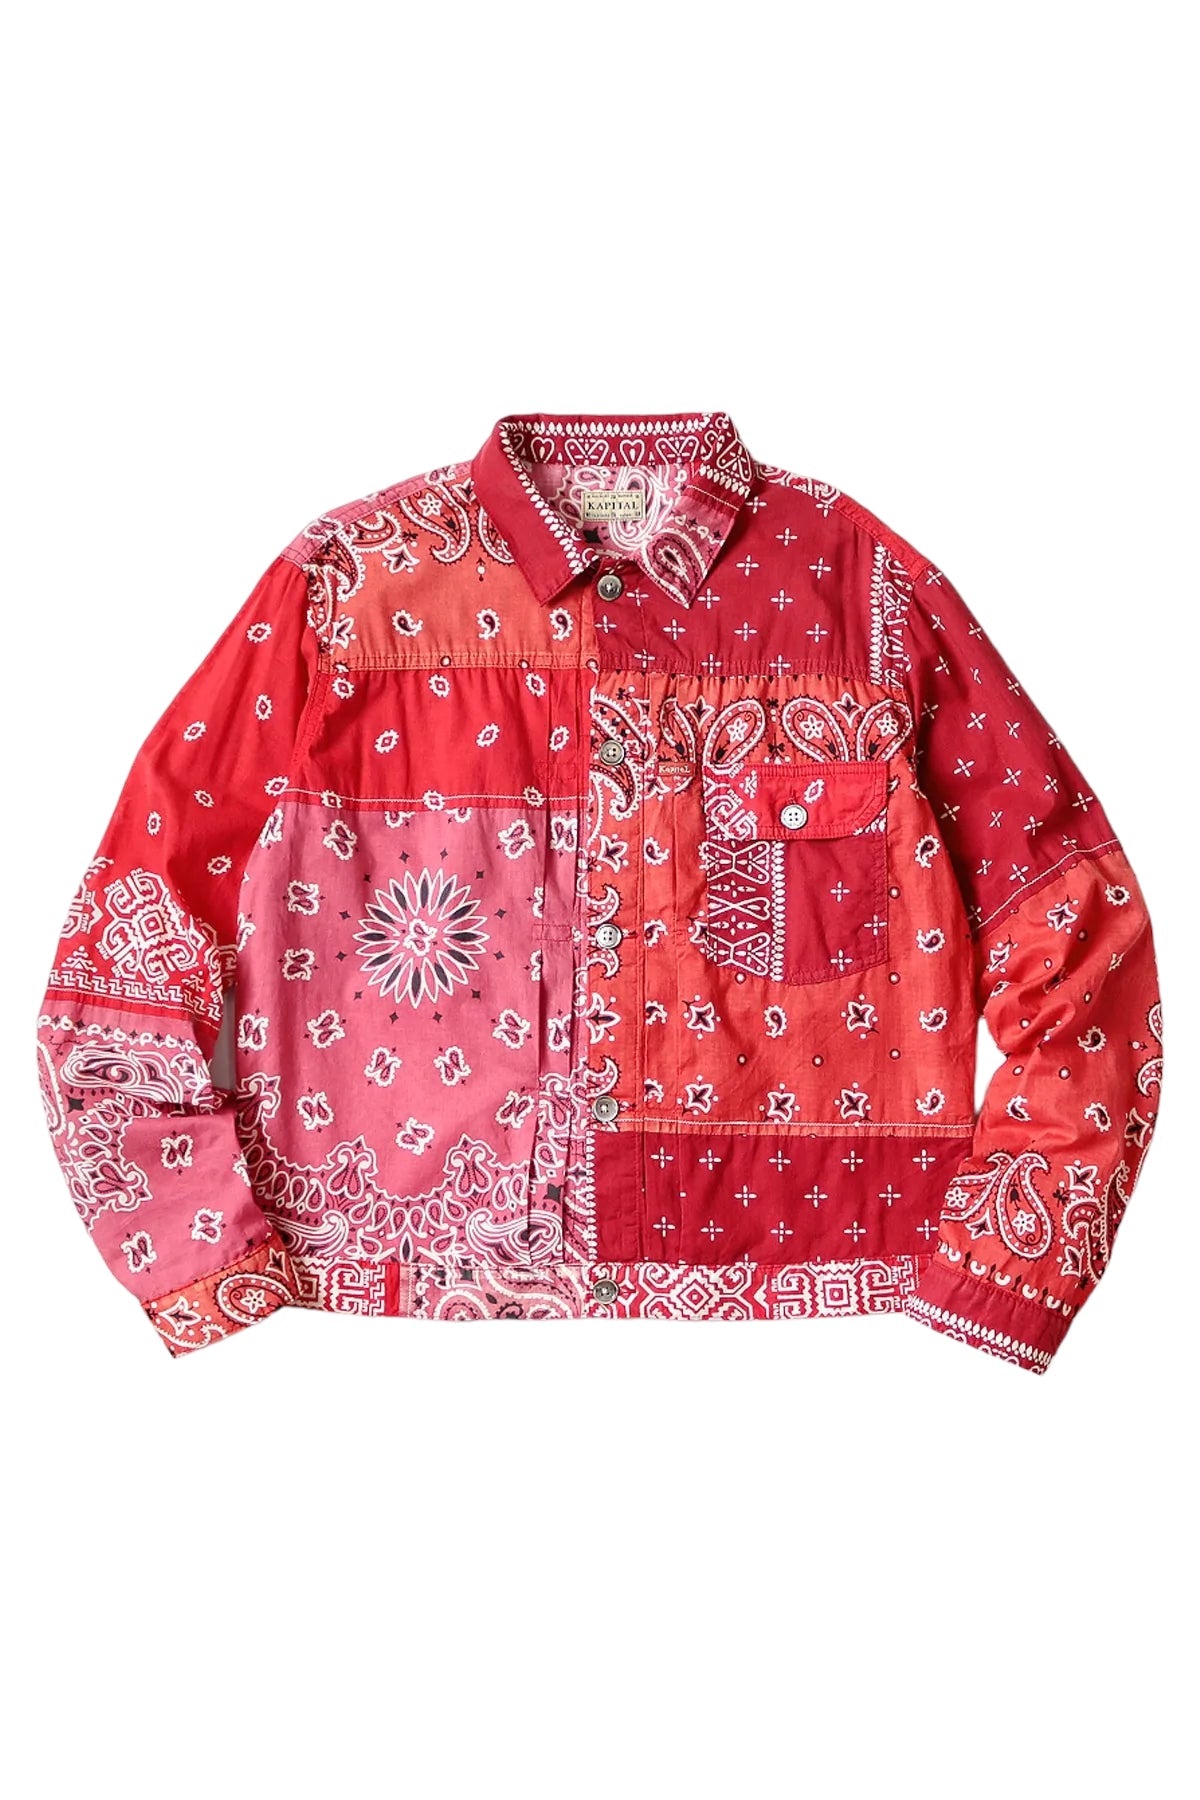 Kapital Patchwork Bandana-Print Cotton Jacket Red - Supra Sneakers